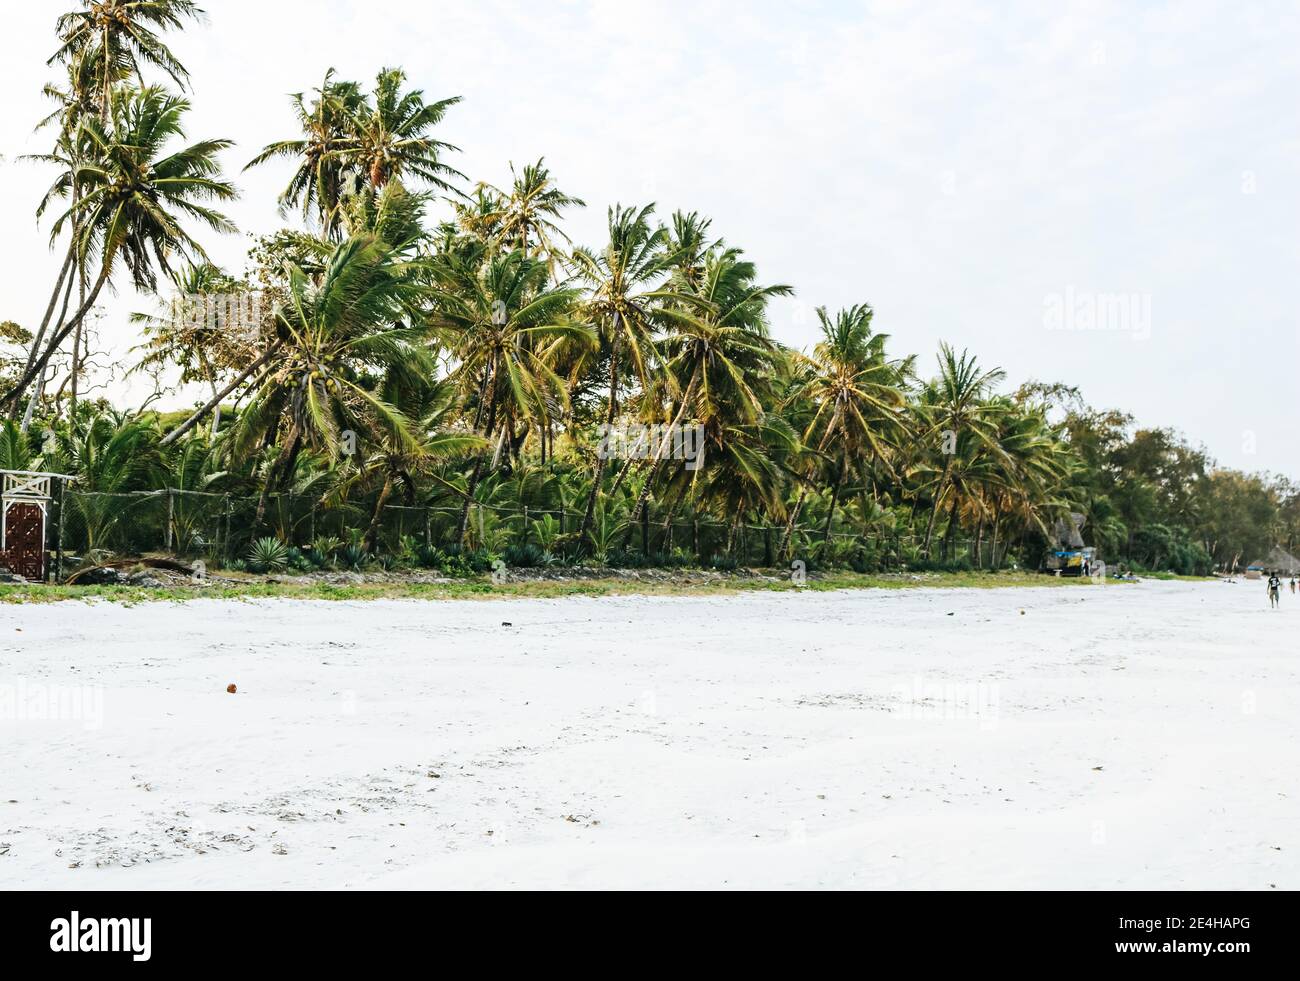 Row of lush, green tropical palm trees along the white sand beach of Diani, Kenya Stock Photo